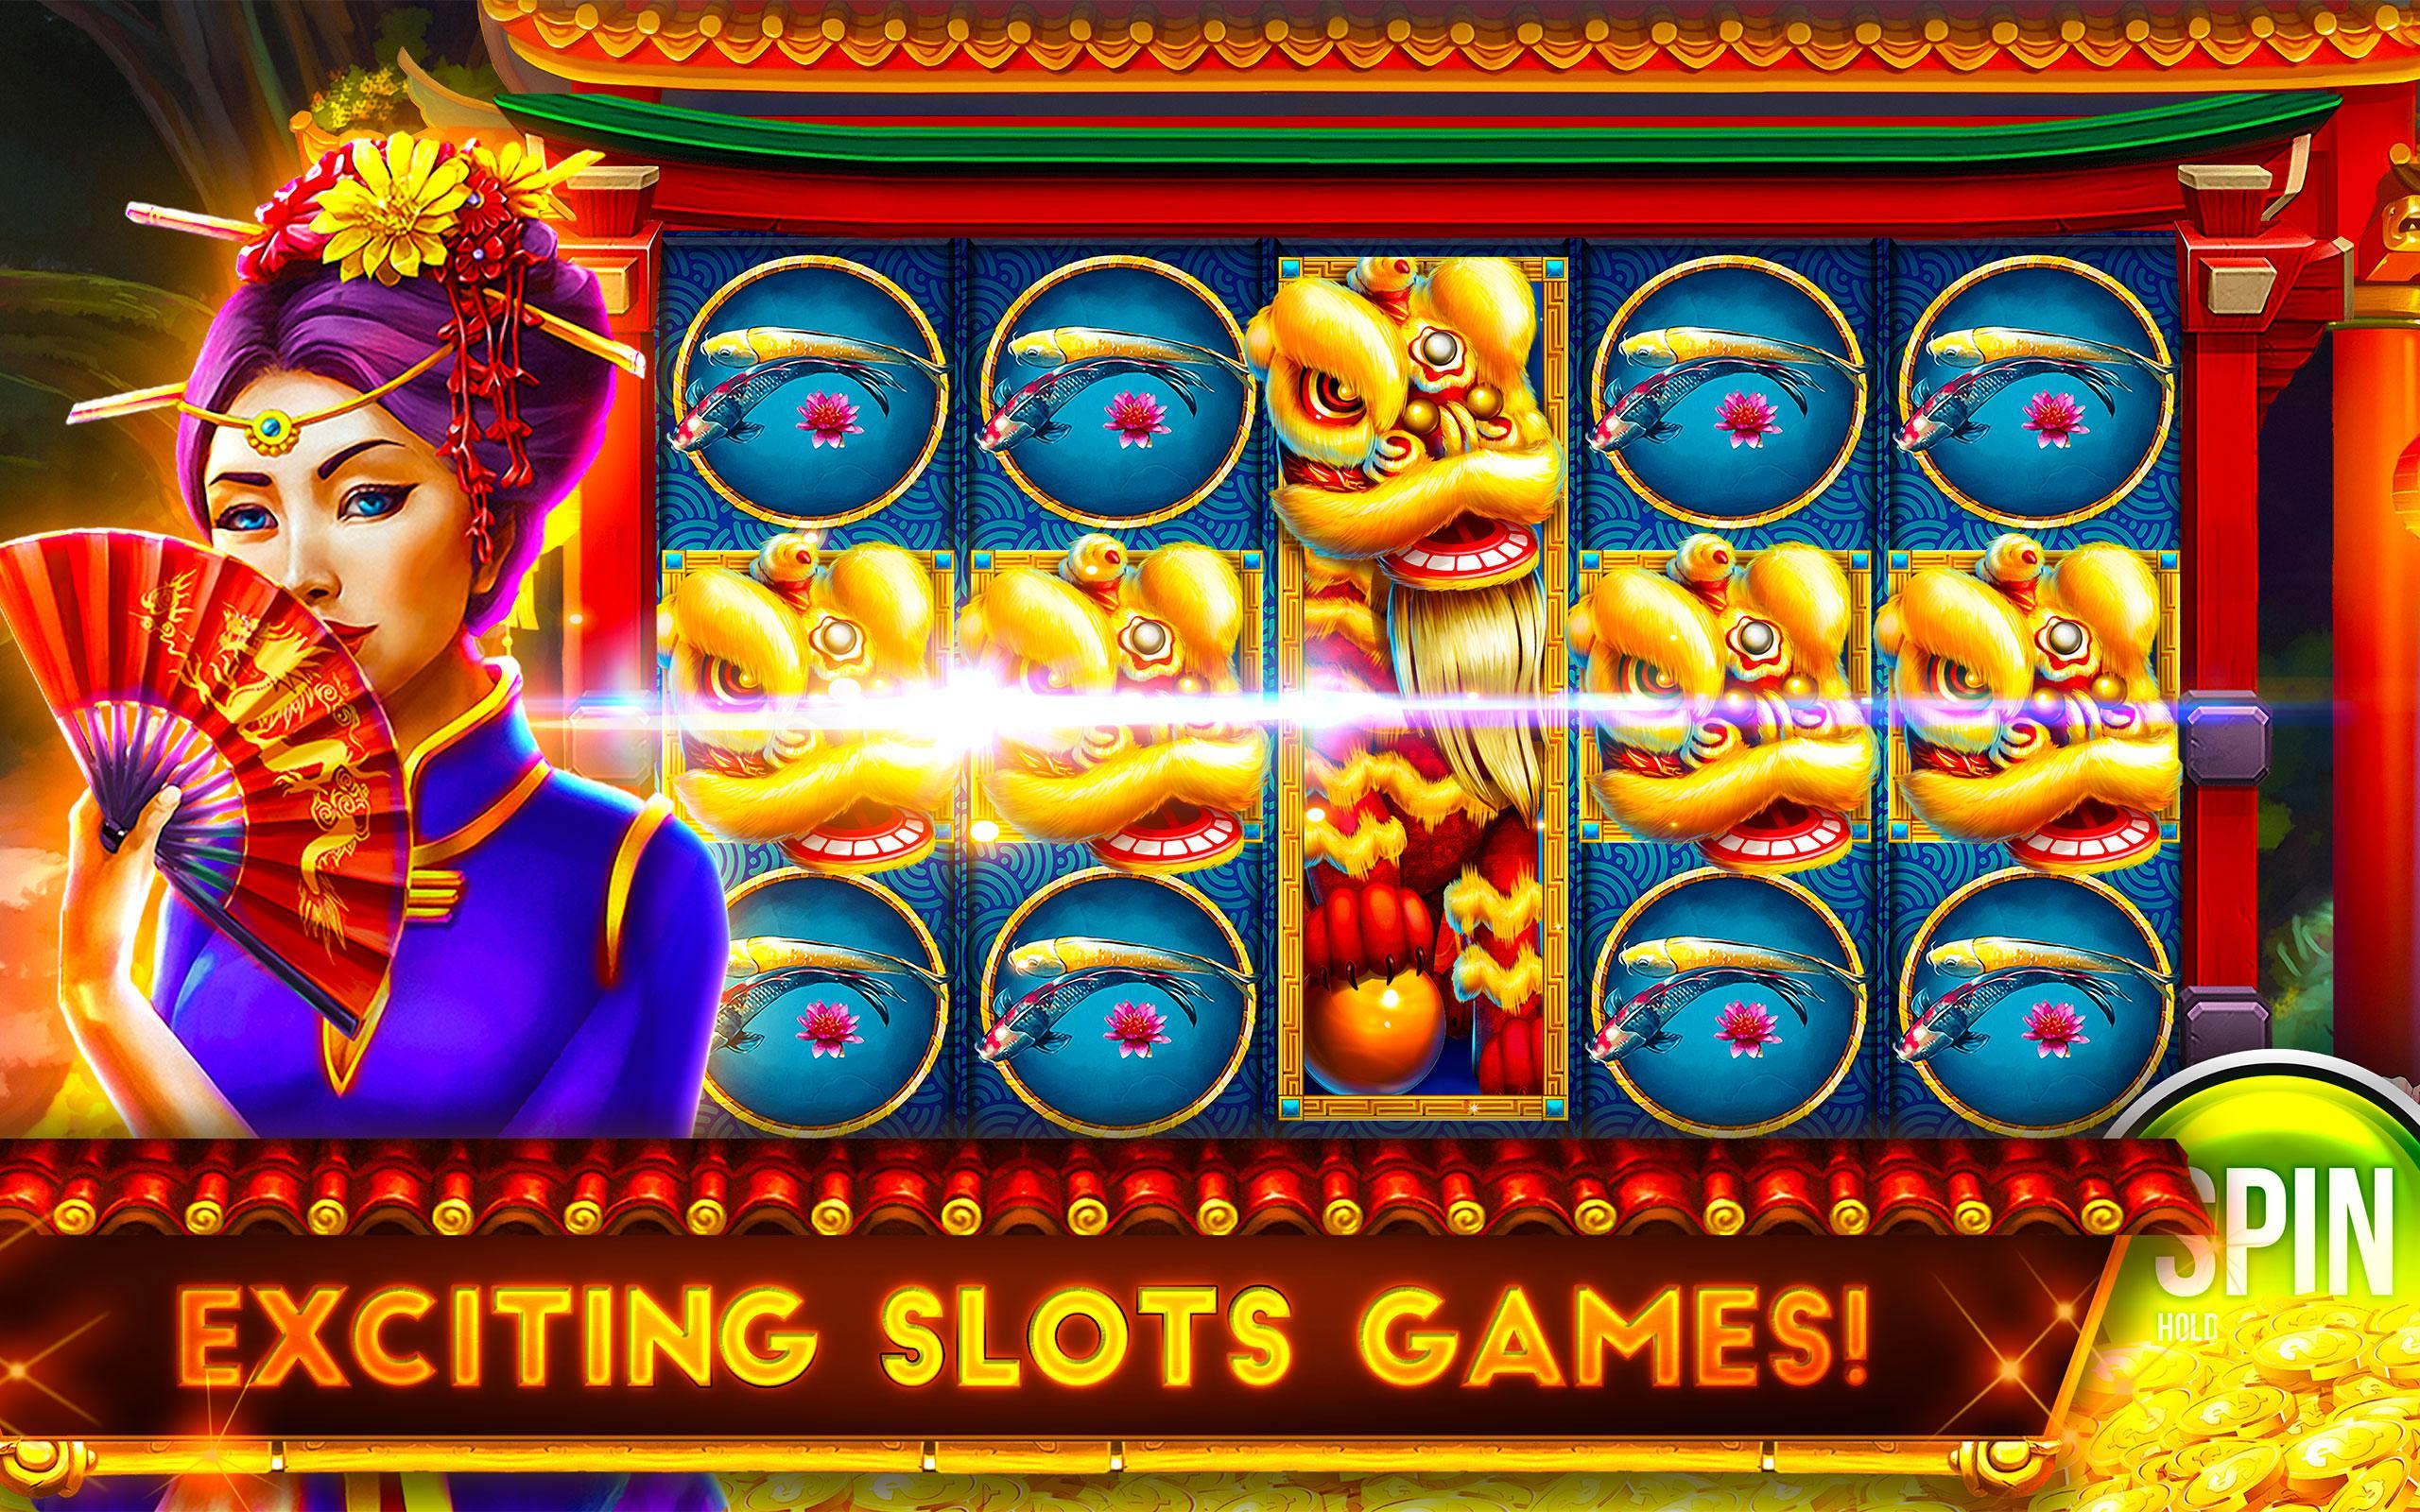 Prosperity Free Online Slots slots casino games free download 